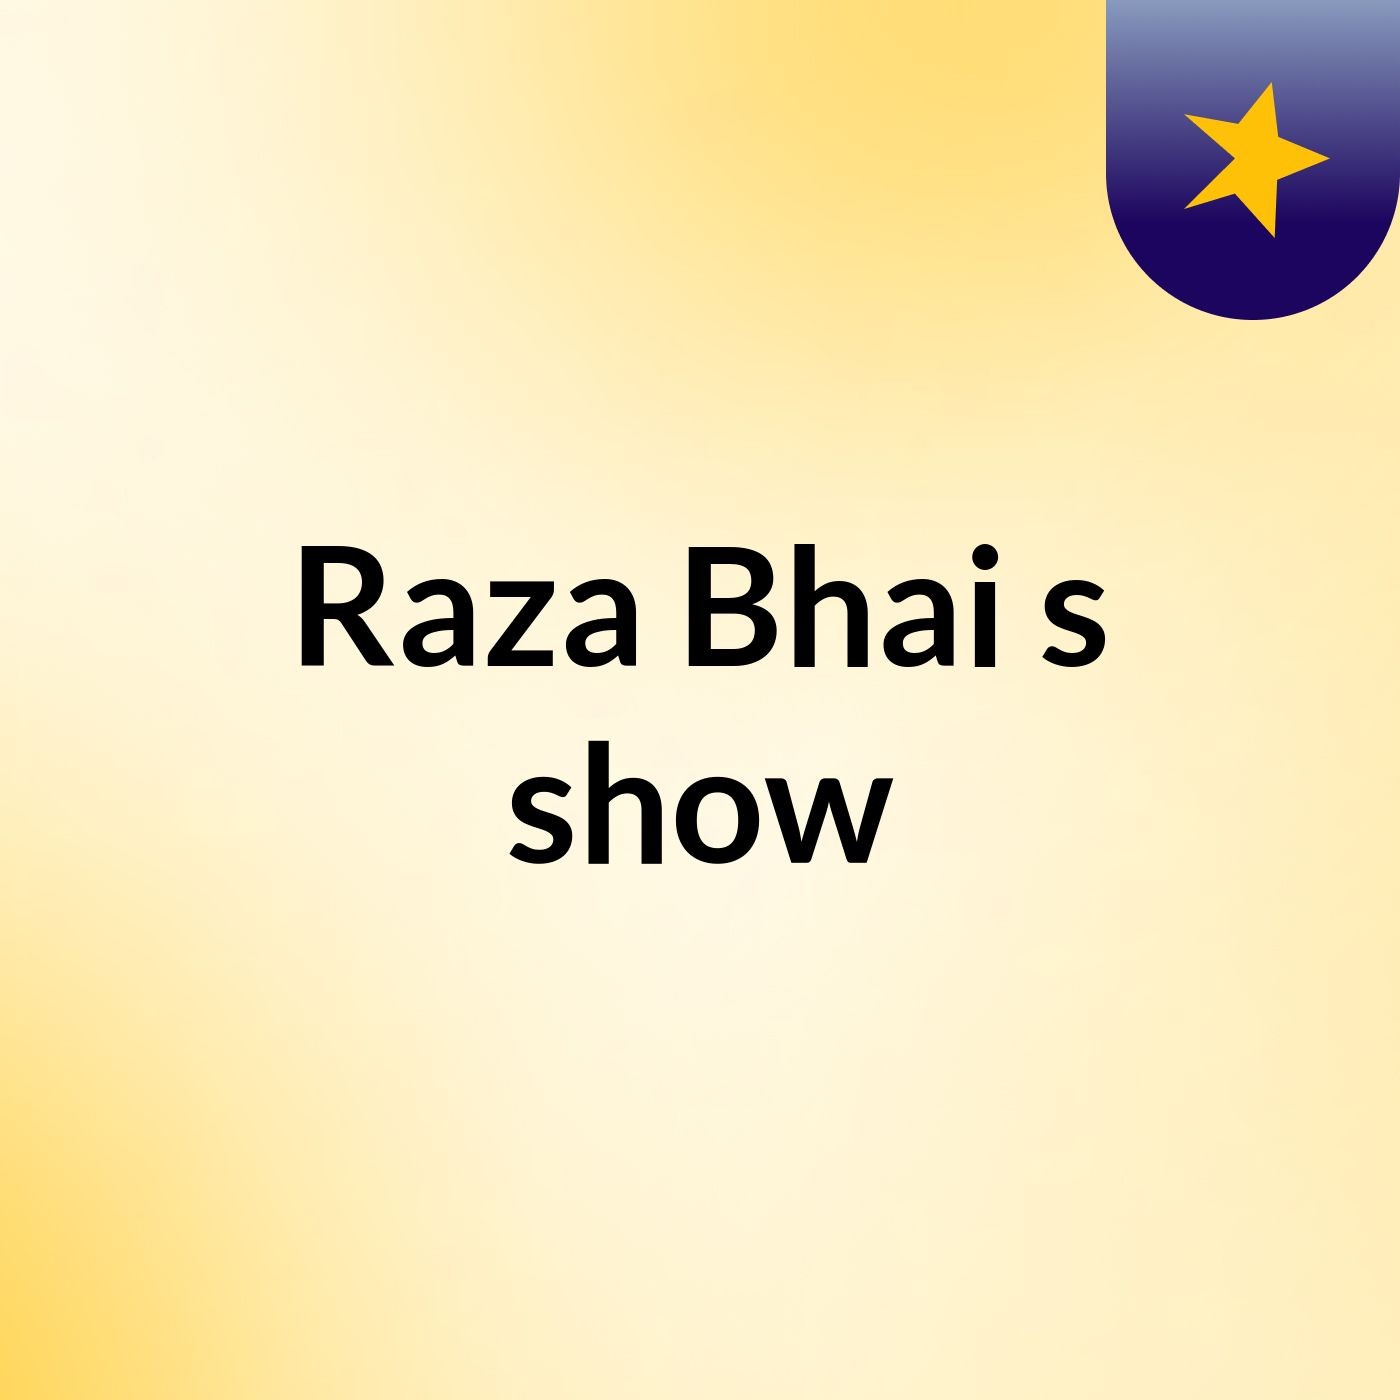 Raza Bhai's show